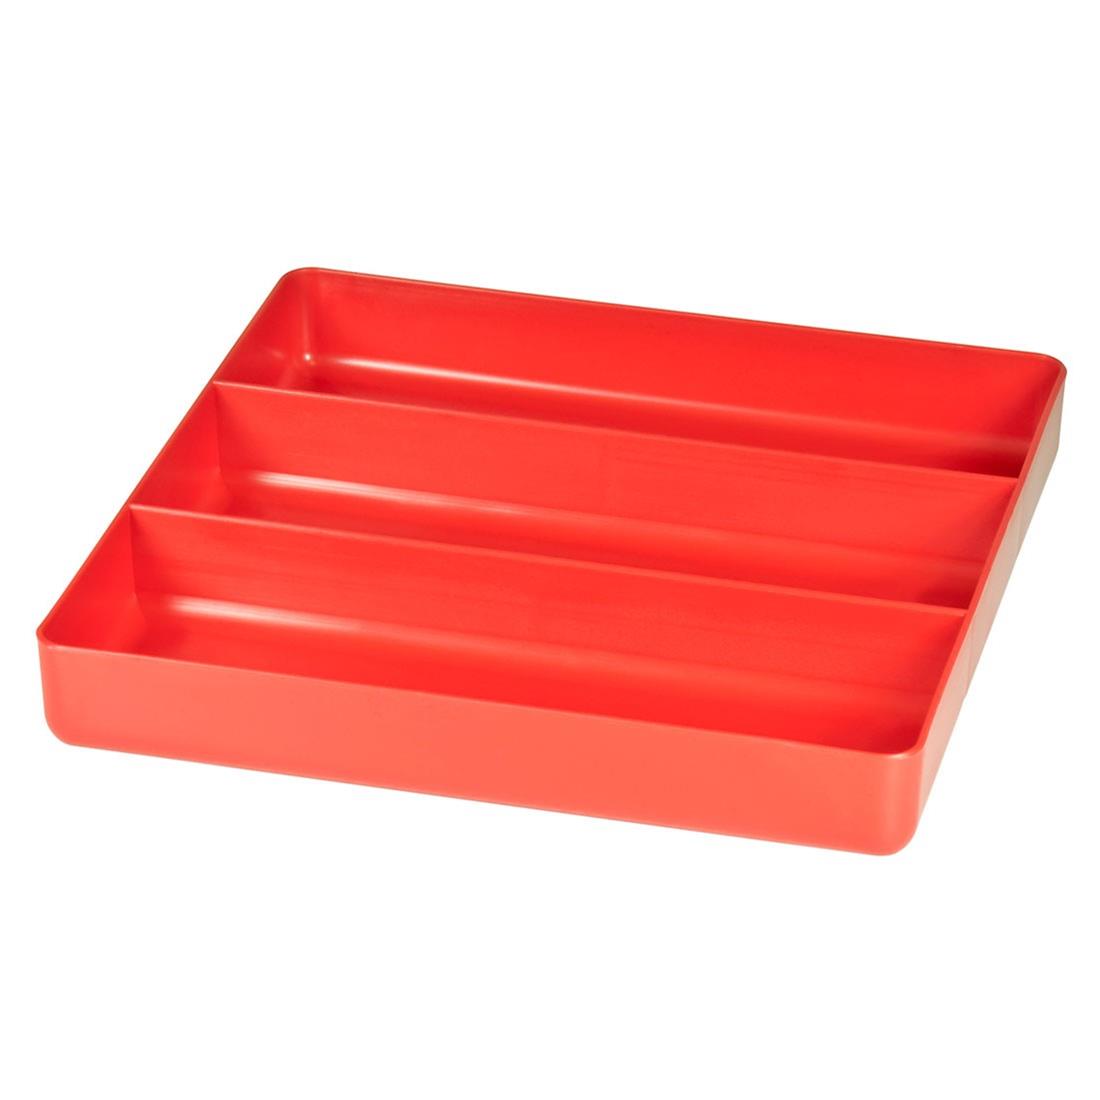 No-Slip 10 Tool Plier Organizer - Red/Black